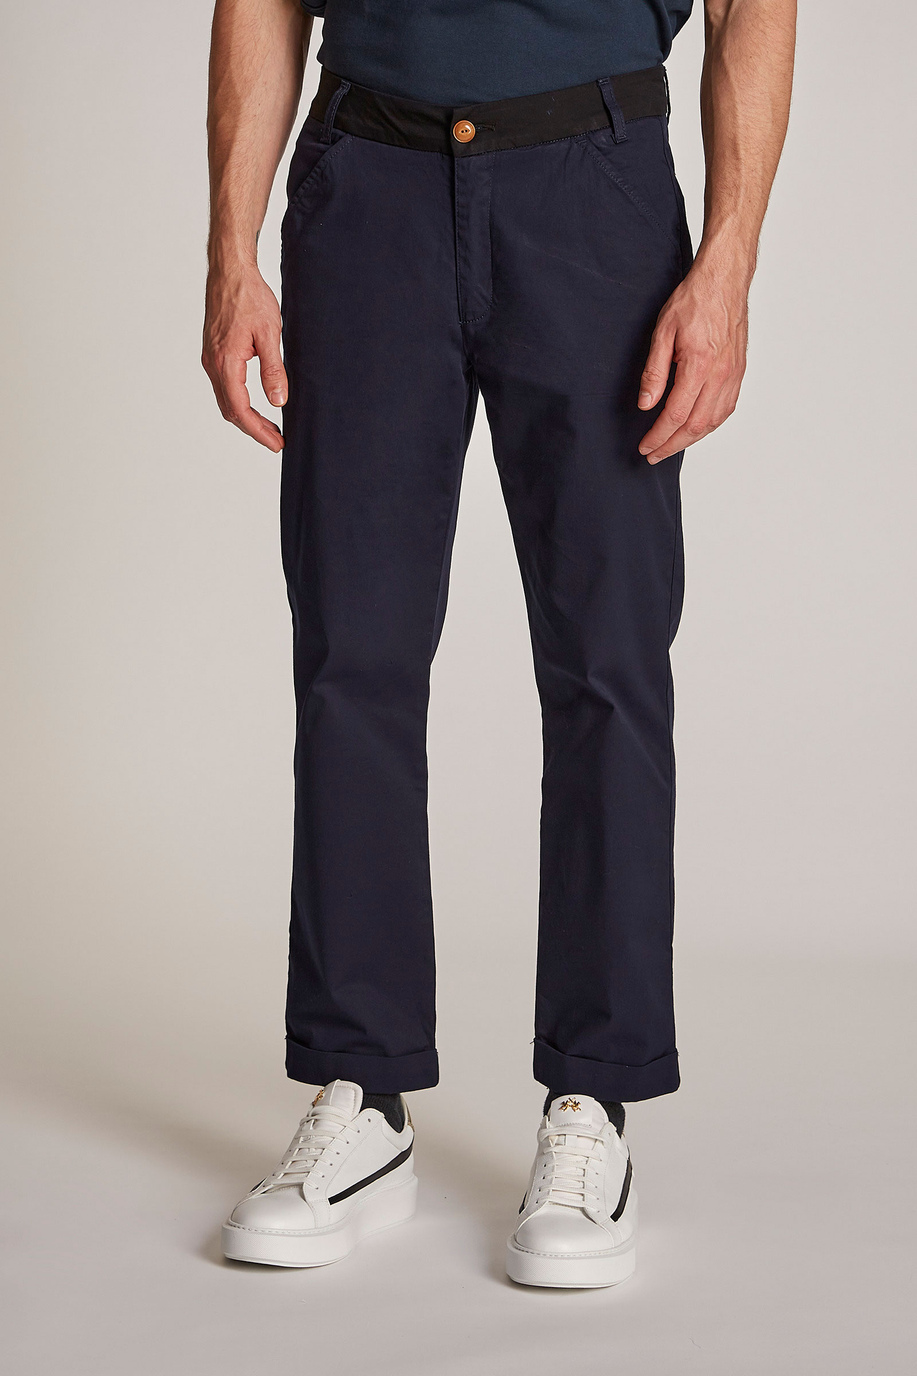 Pantalone da uomo in cotone misto lino regular fit - Leyendas del Polo | La Martina - Official Online Shop